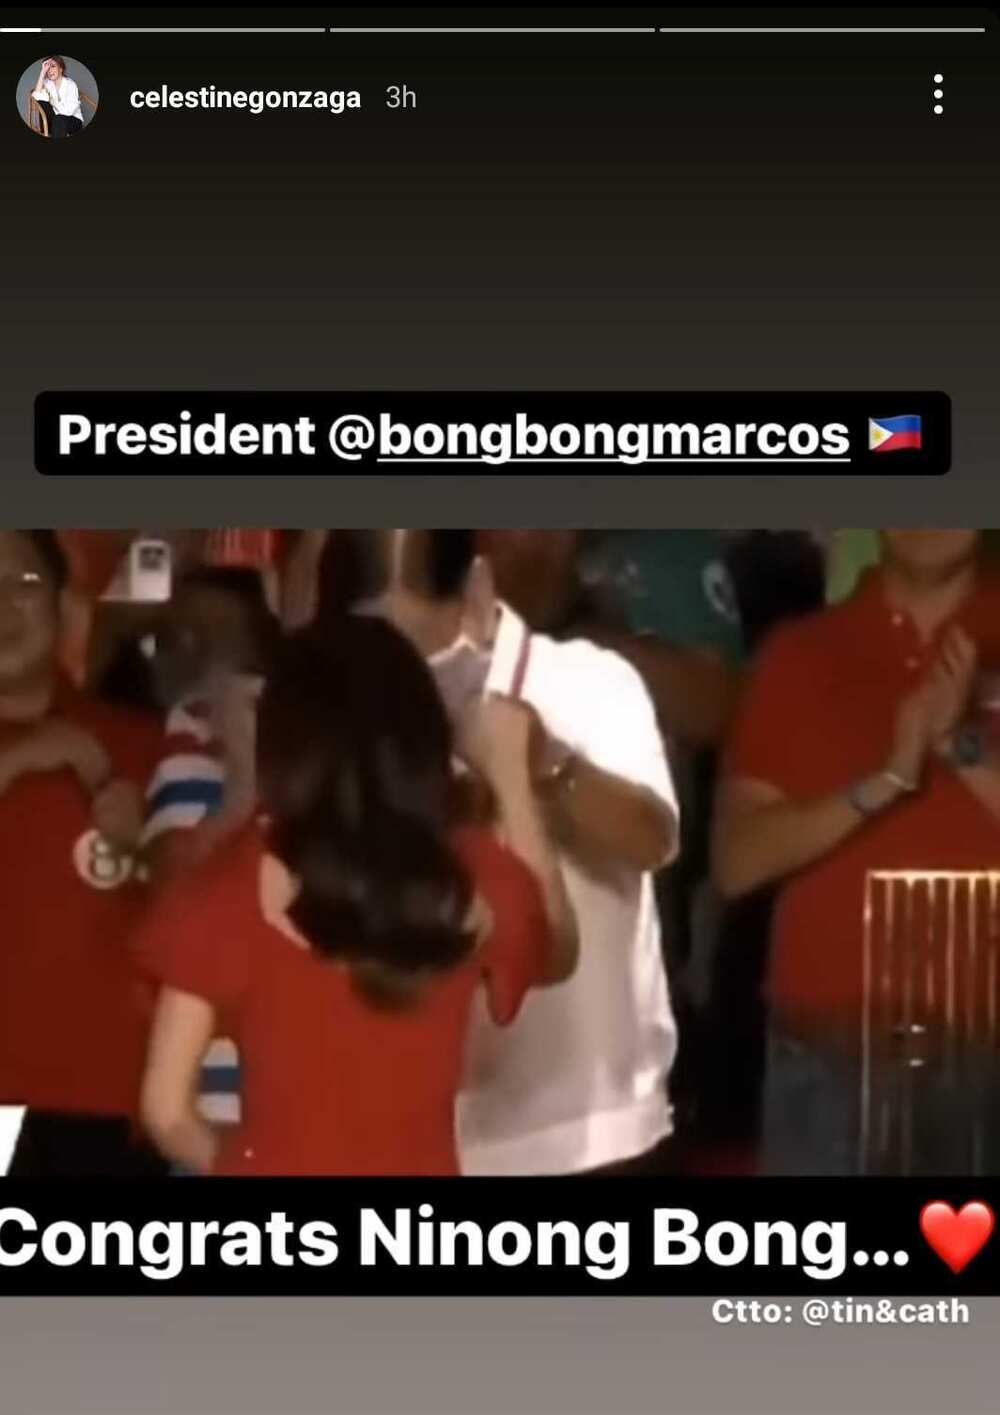 Toni Gonzaga congratulates Bongbong Marcos: "Congrats Ninong Bong"